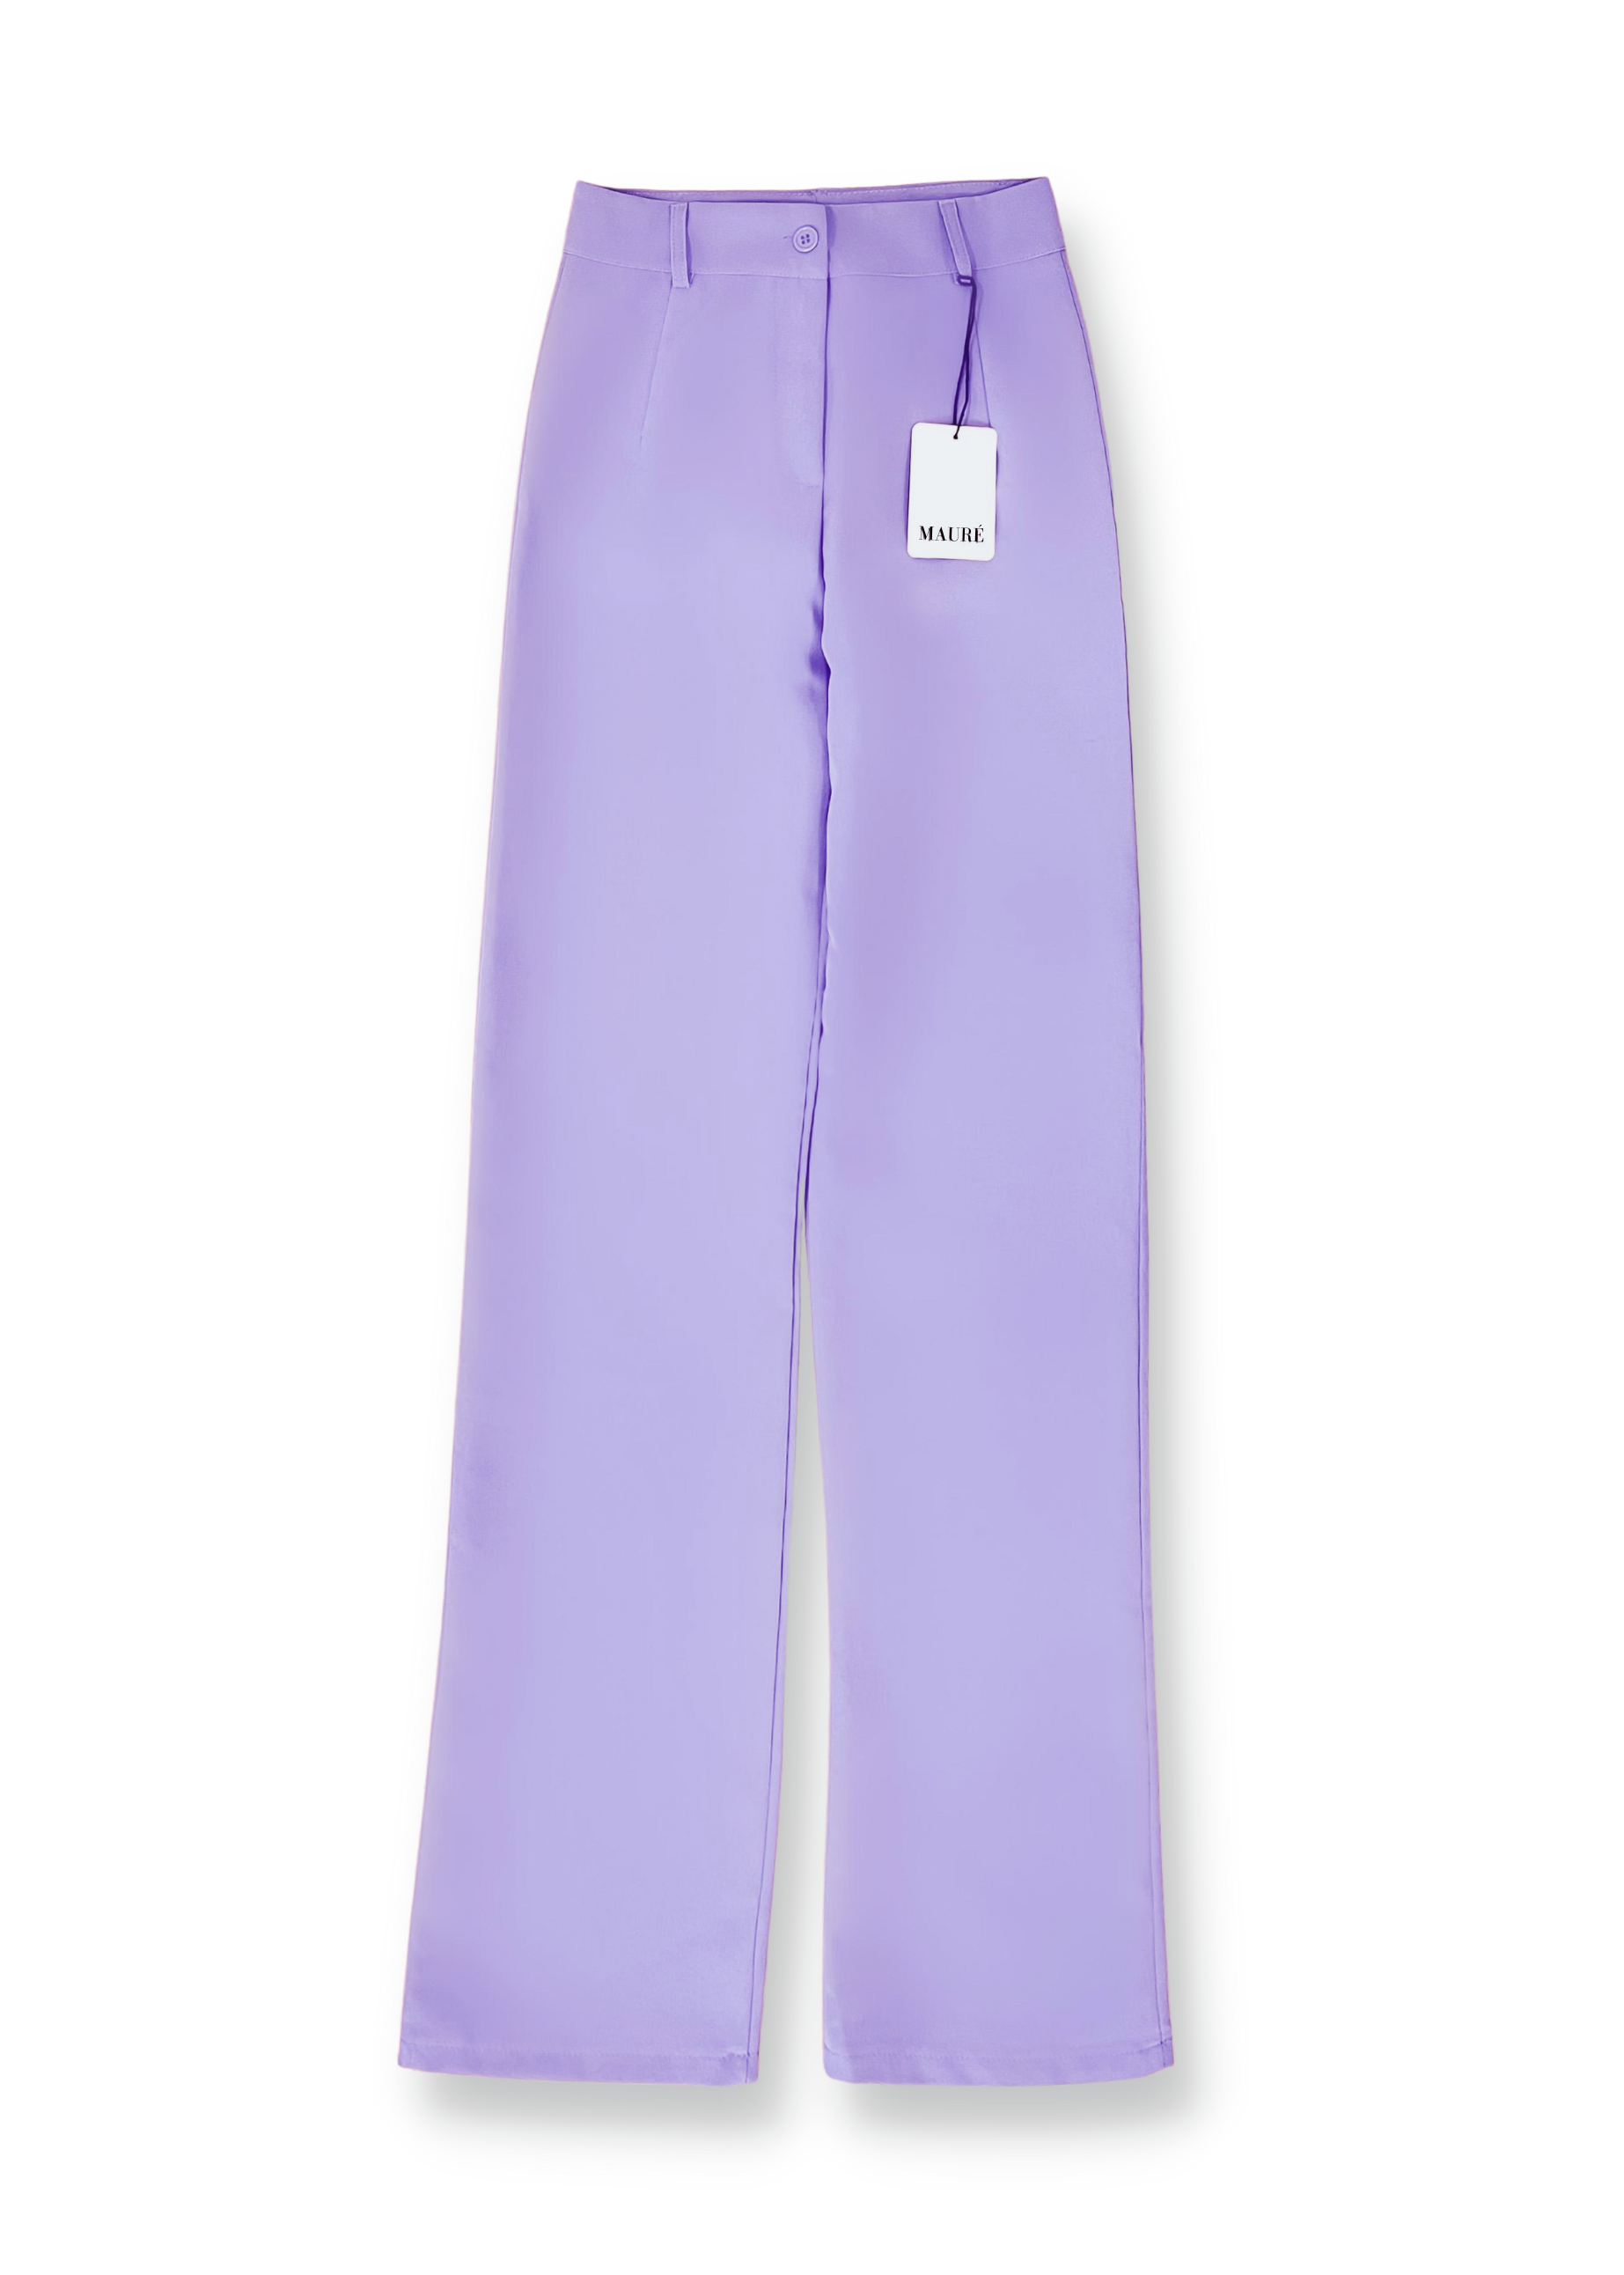 Straight leg pants classic lila (REGULAR)